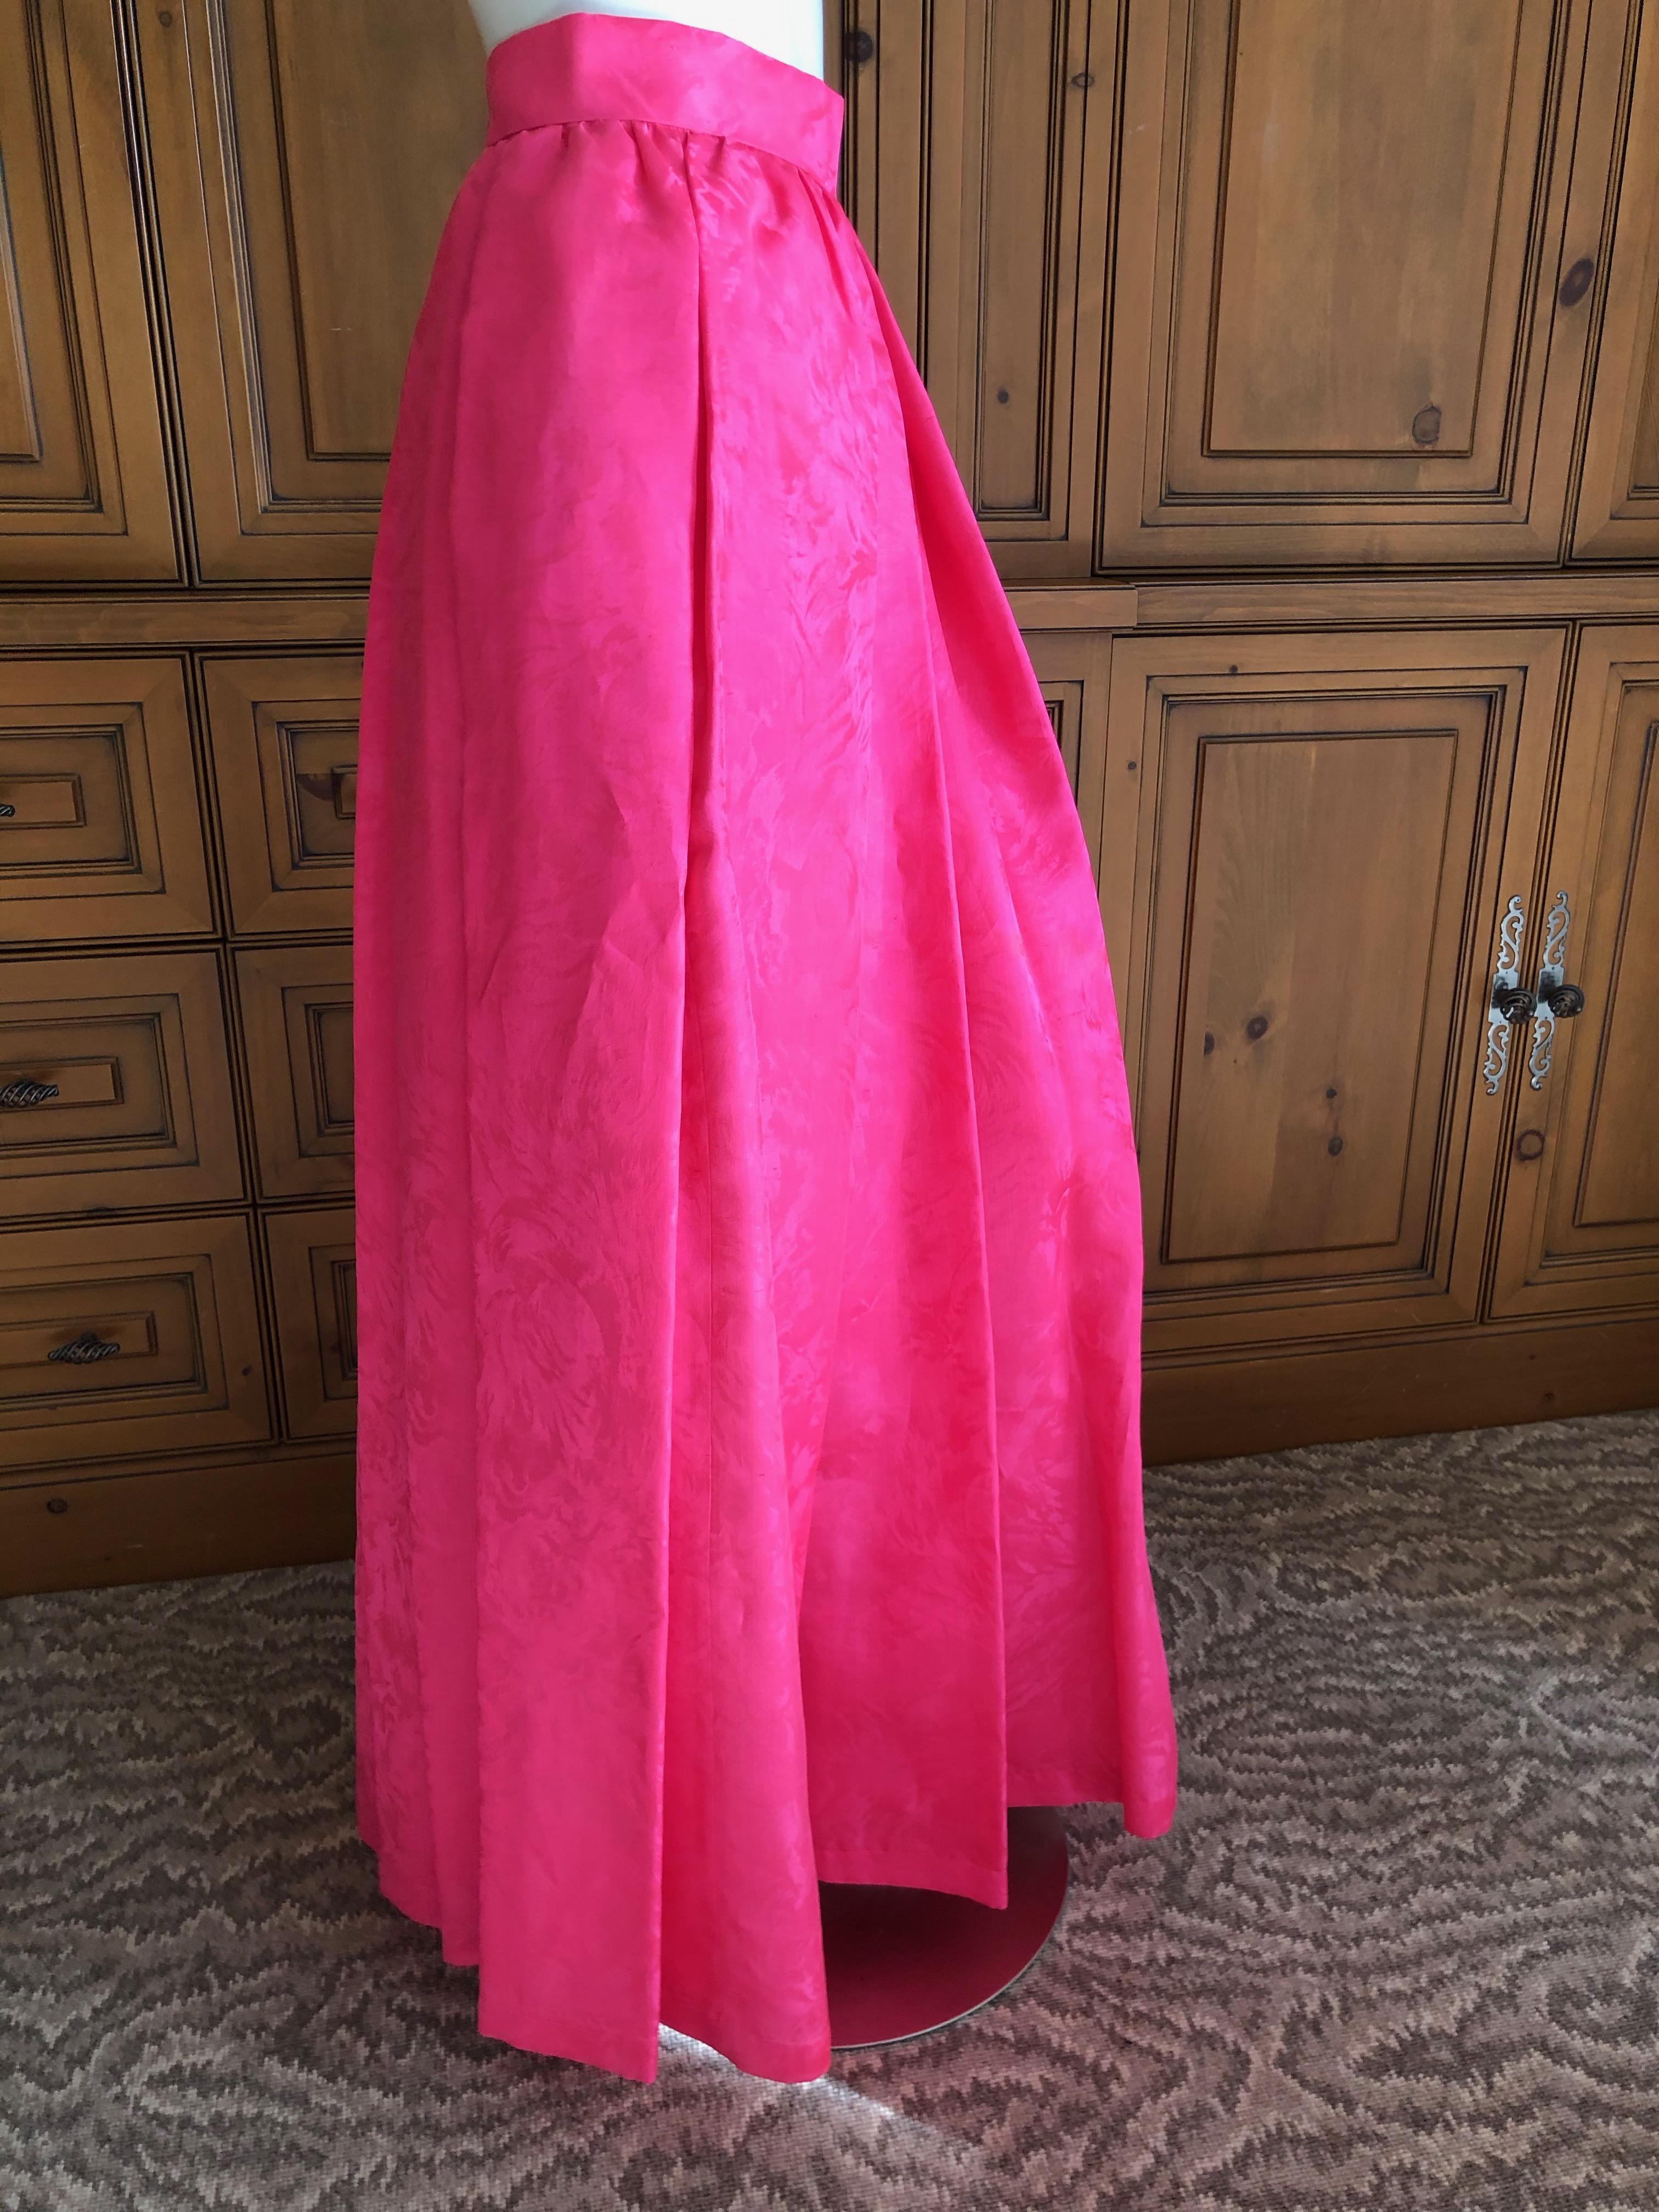 Yves Saint Laurent Rive Gauche Vintage 70's Pink Silk Faille Ball Skirt w Two Pockets
Size 40
Waist 26